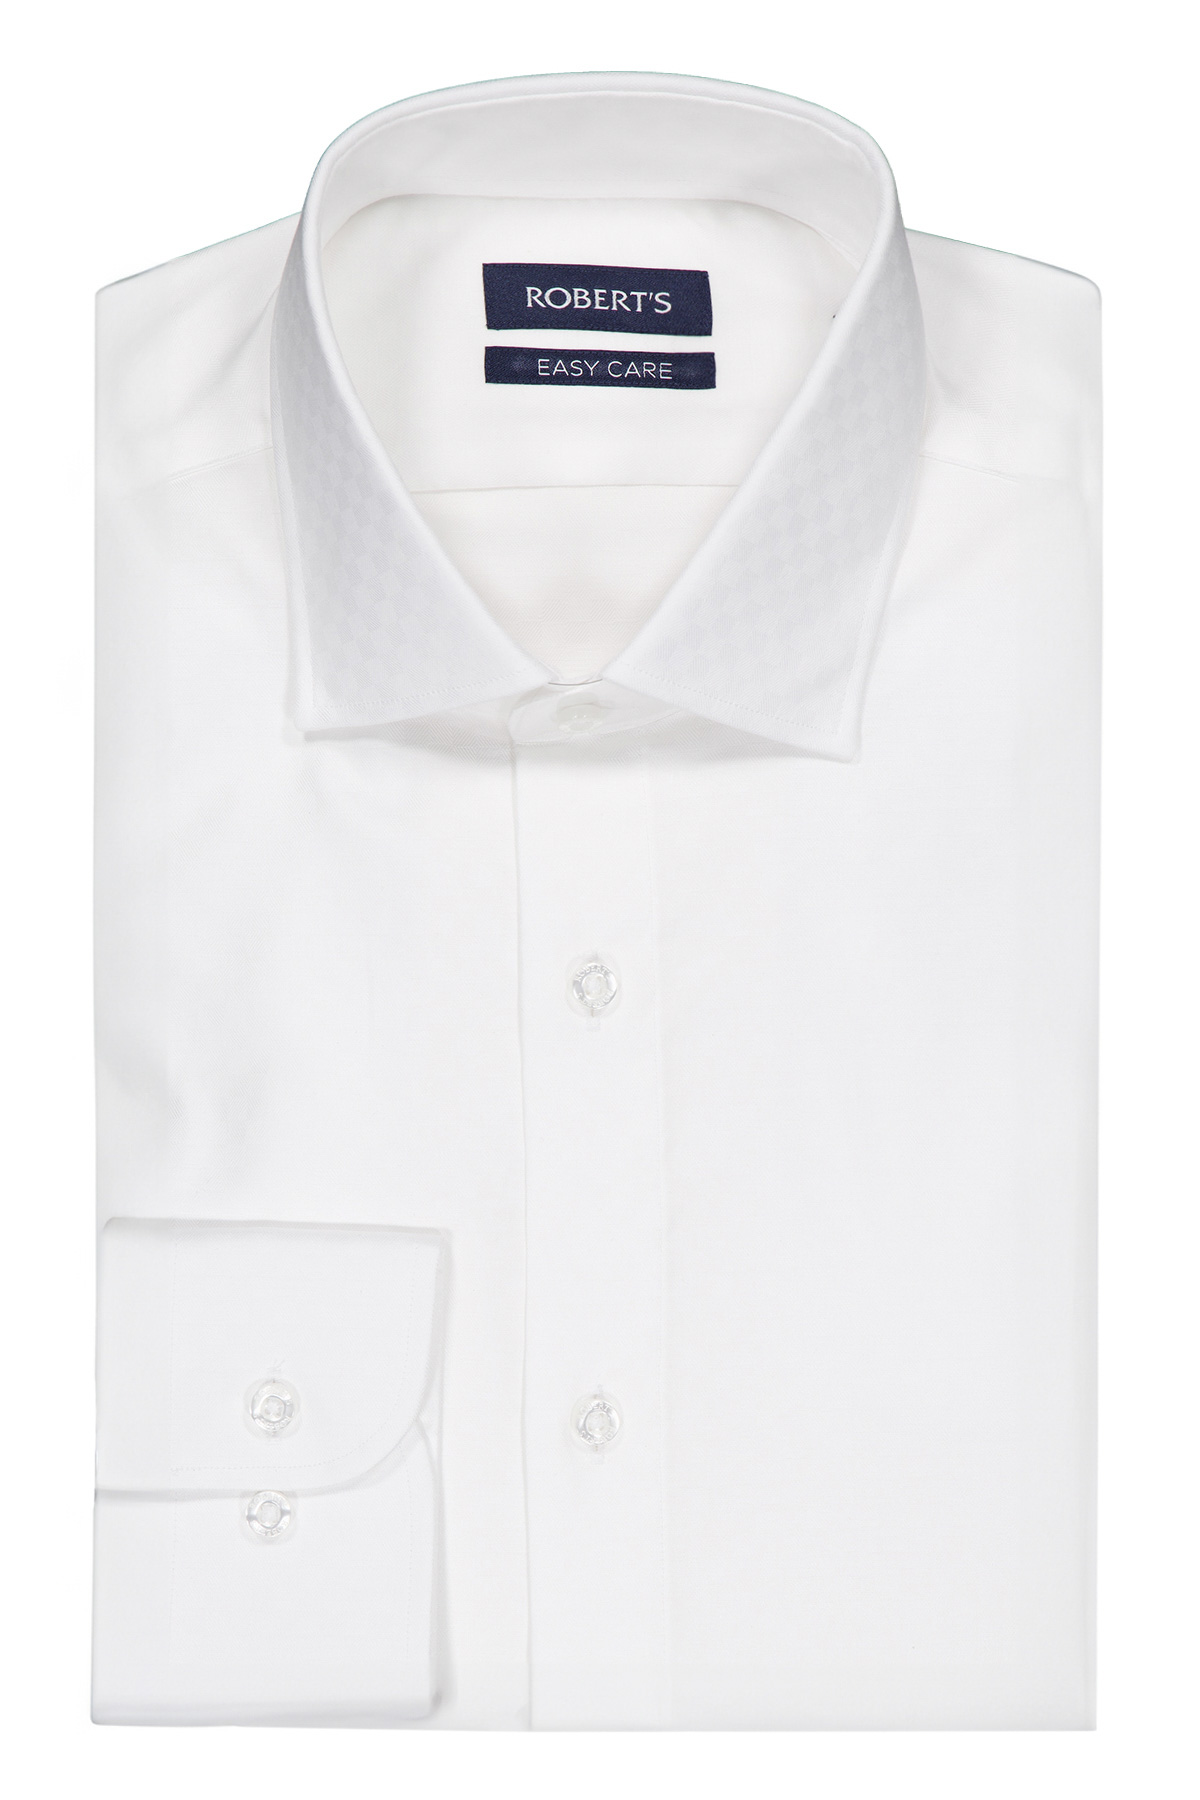 Camisa Formal Roberts Easy Care Color Blanco Slim Fit